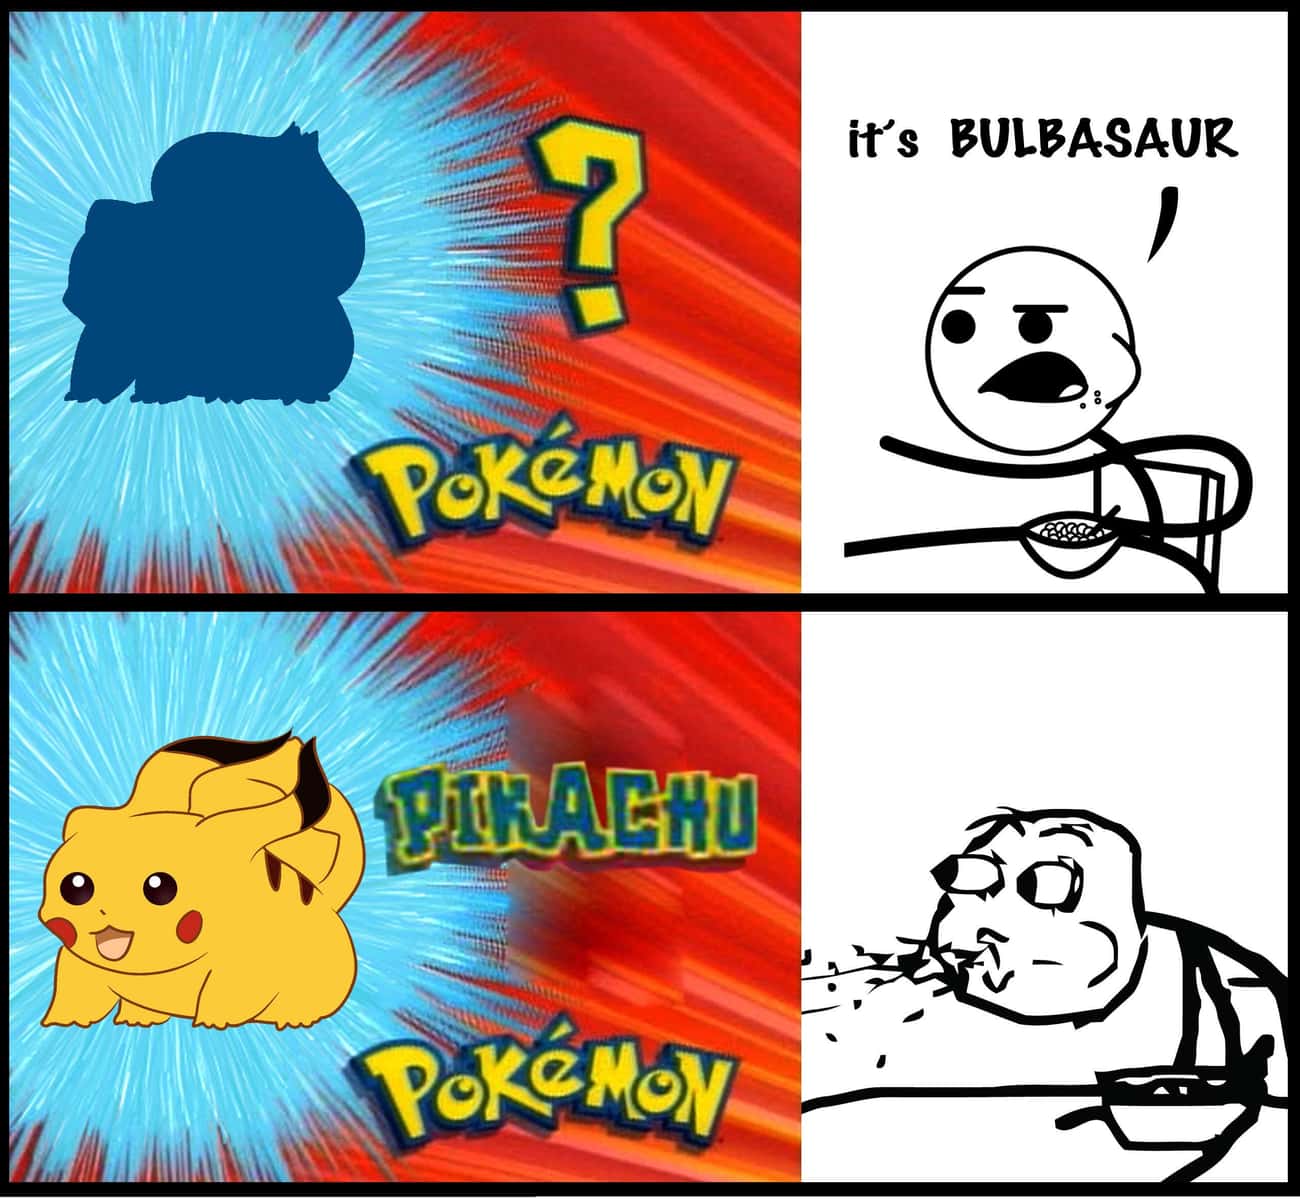 A meme about the Pokemon anime game, who's that Pokemon